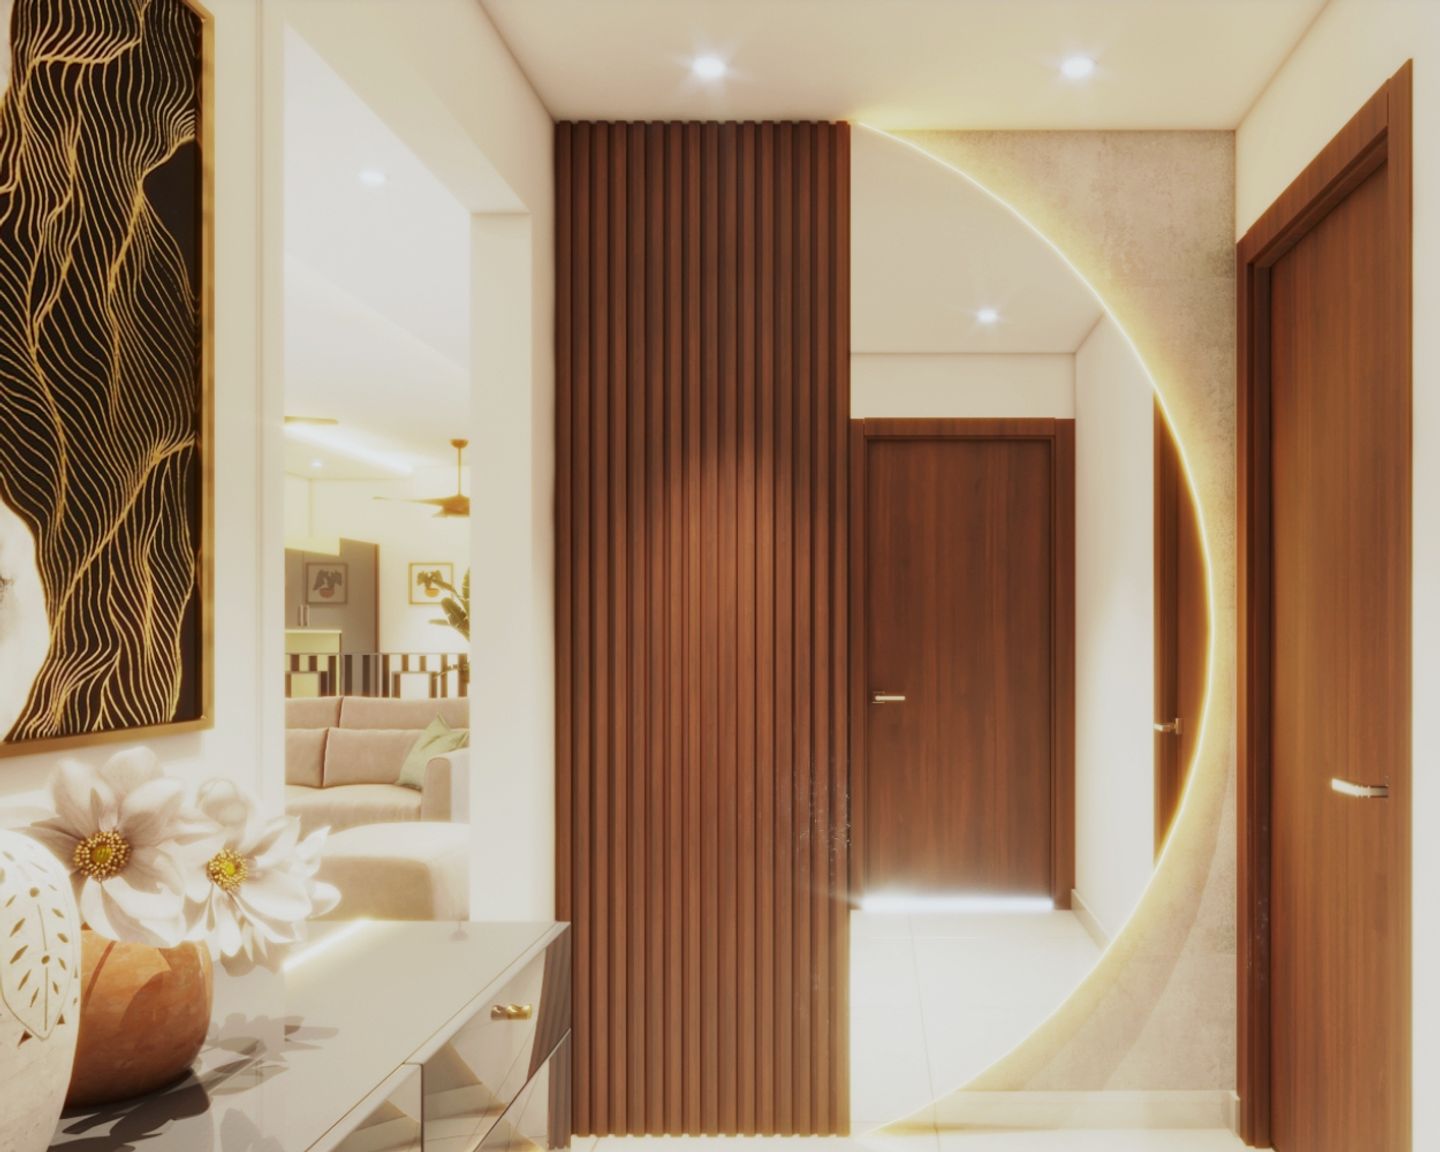 Dove Grey Foyer Design With Vertical Wooden Panels - Livspace